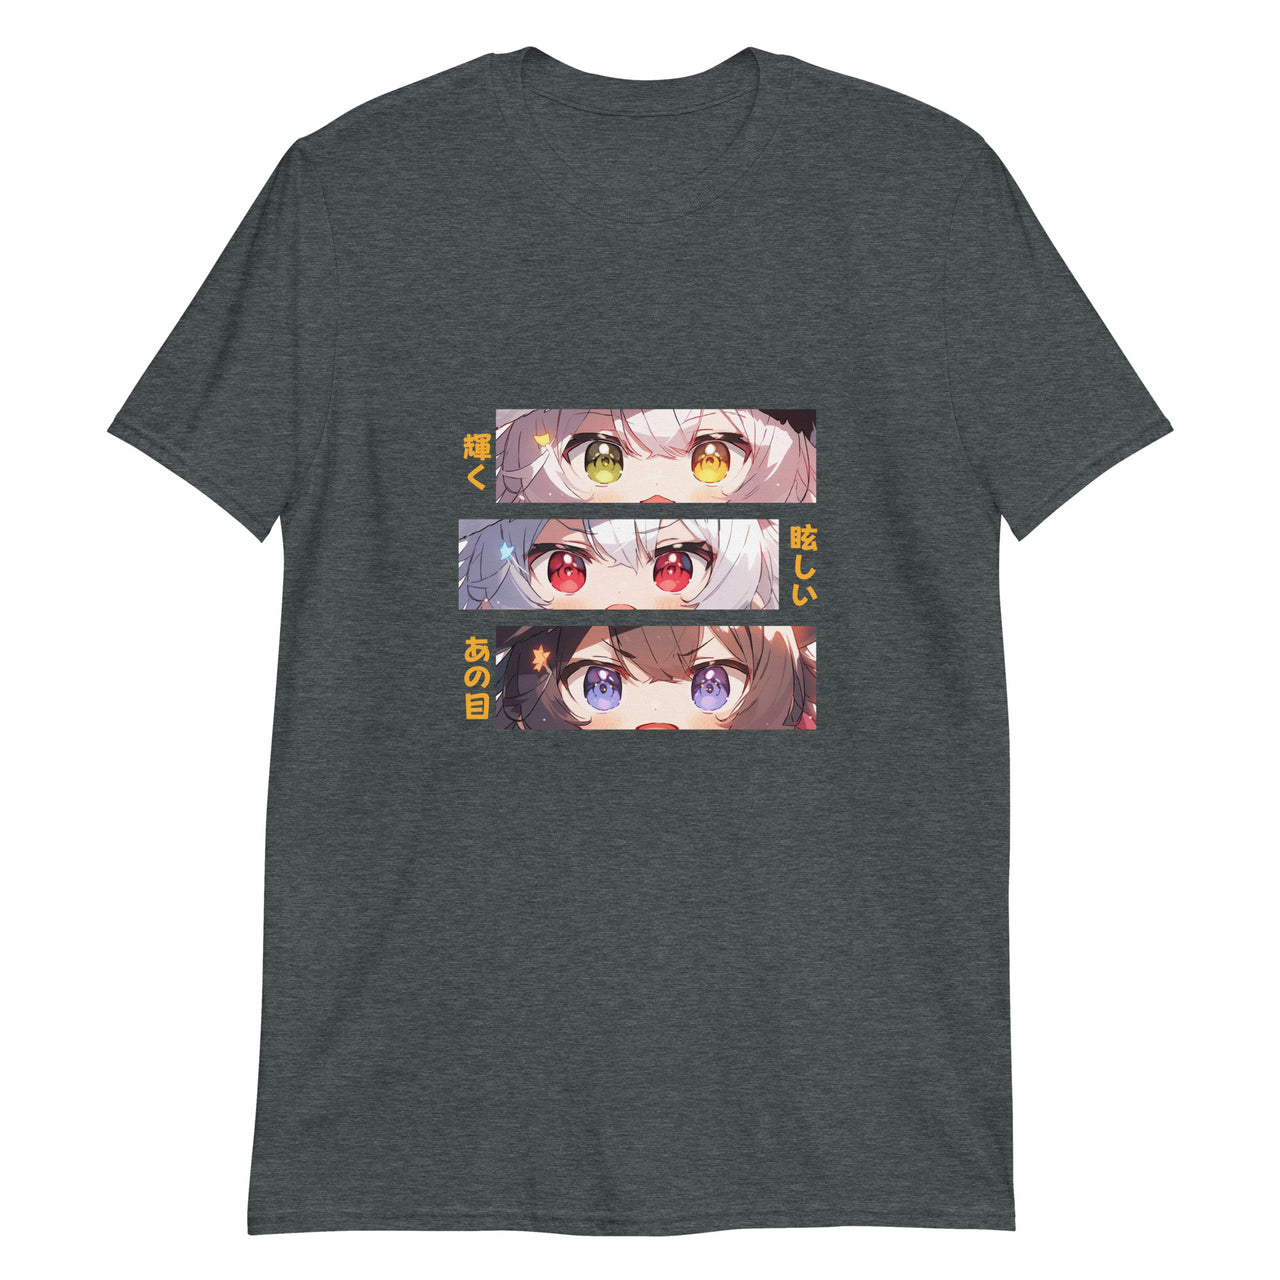 Kawaii Anime Eyes "Kagayaku, Mabushii" Anime-Styled Shirt